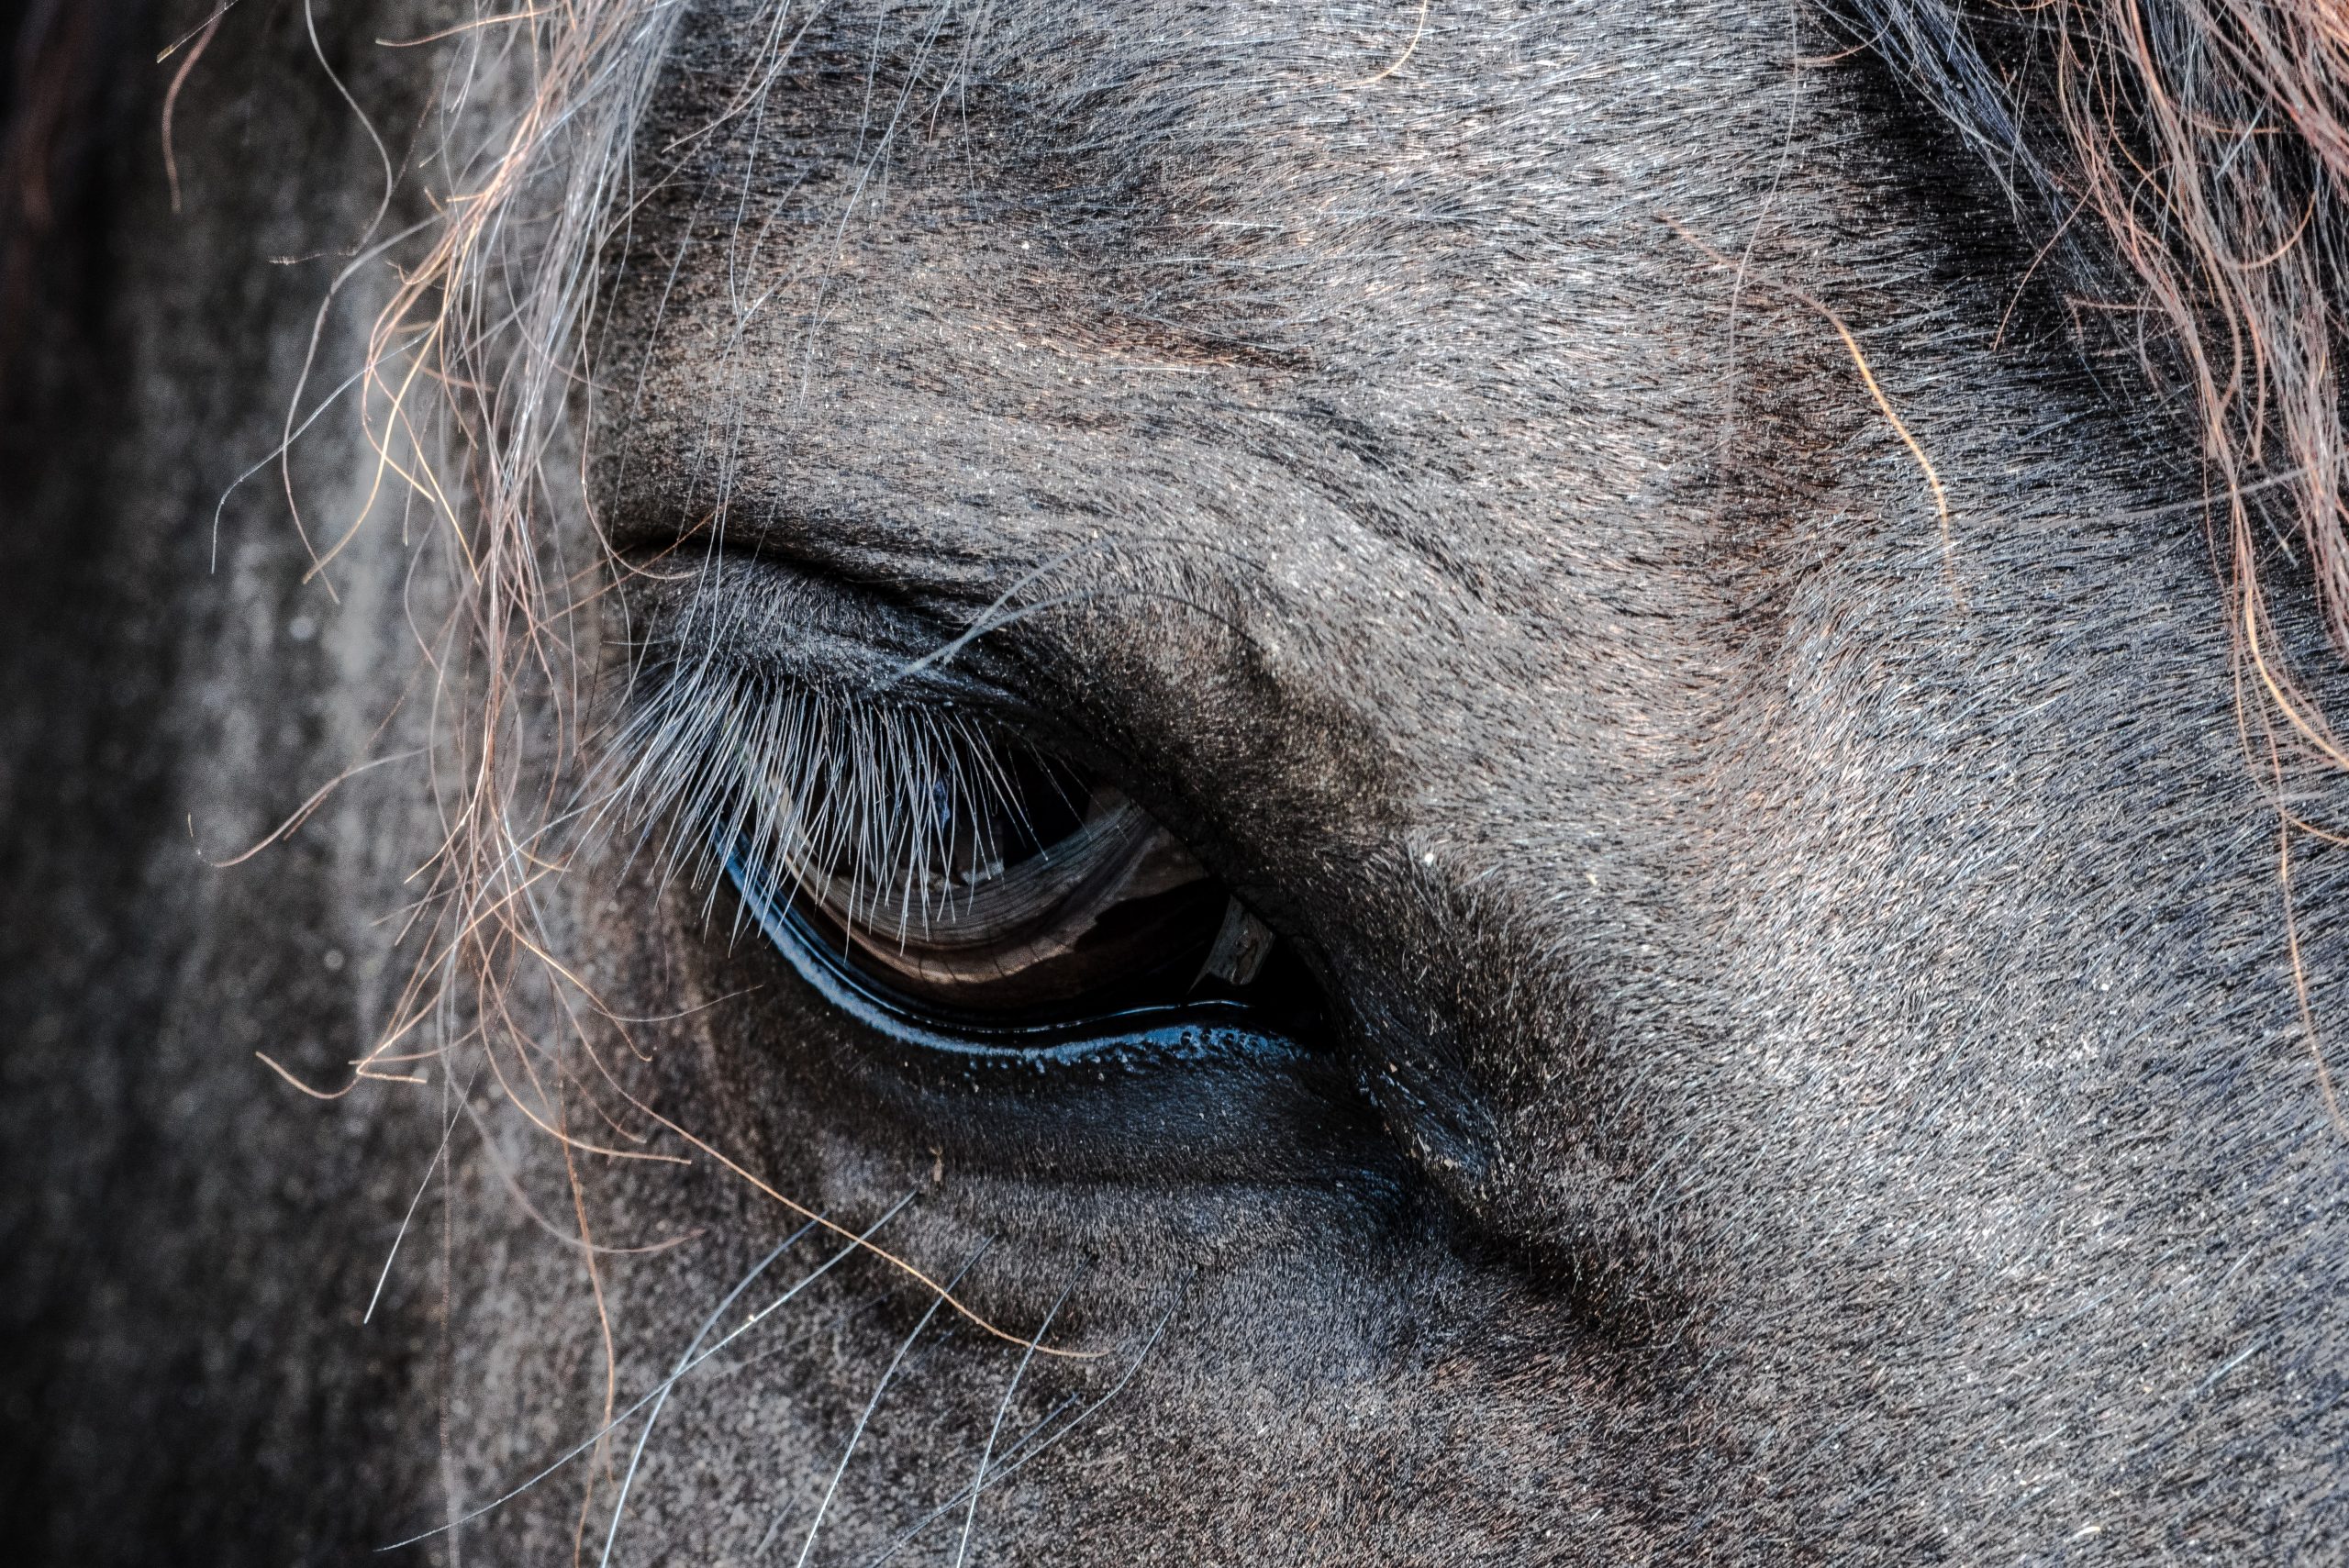 Gray horse's eye